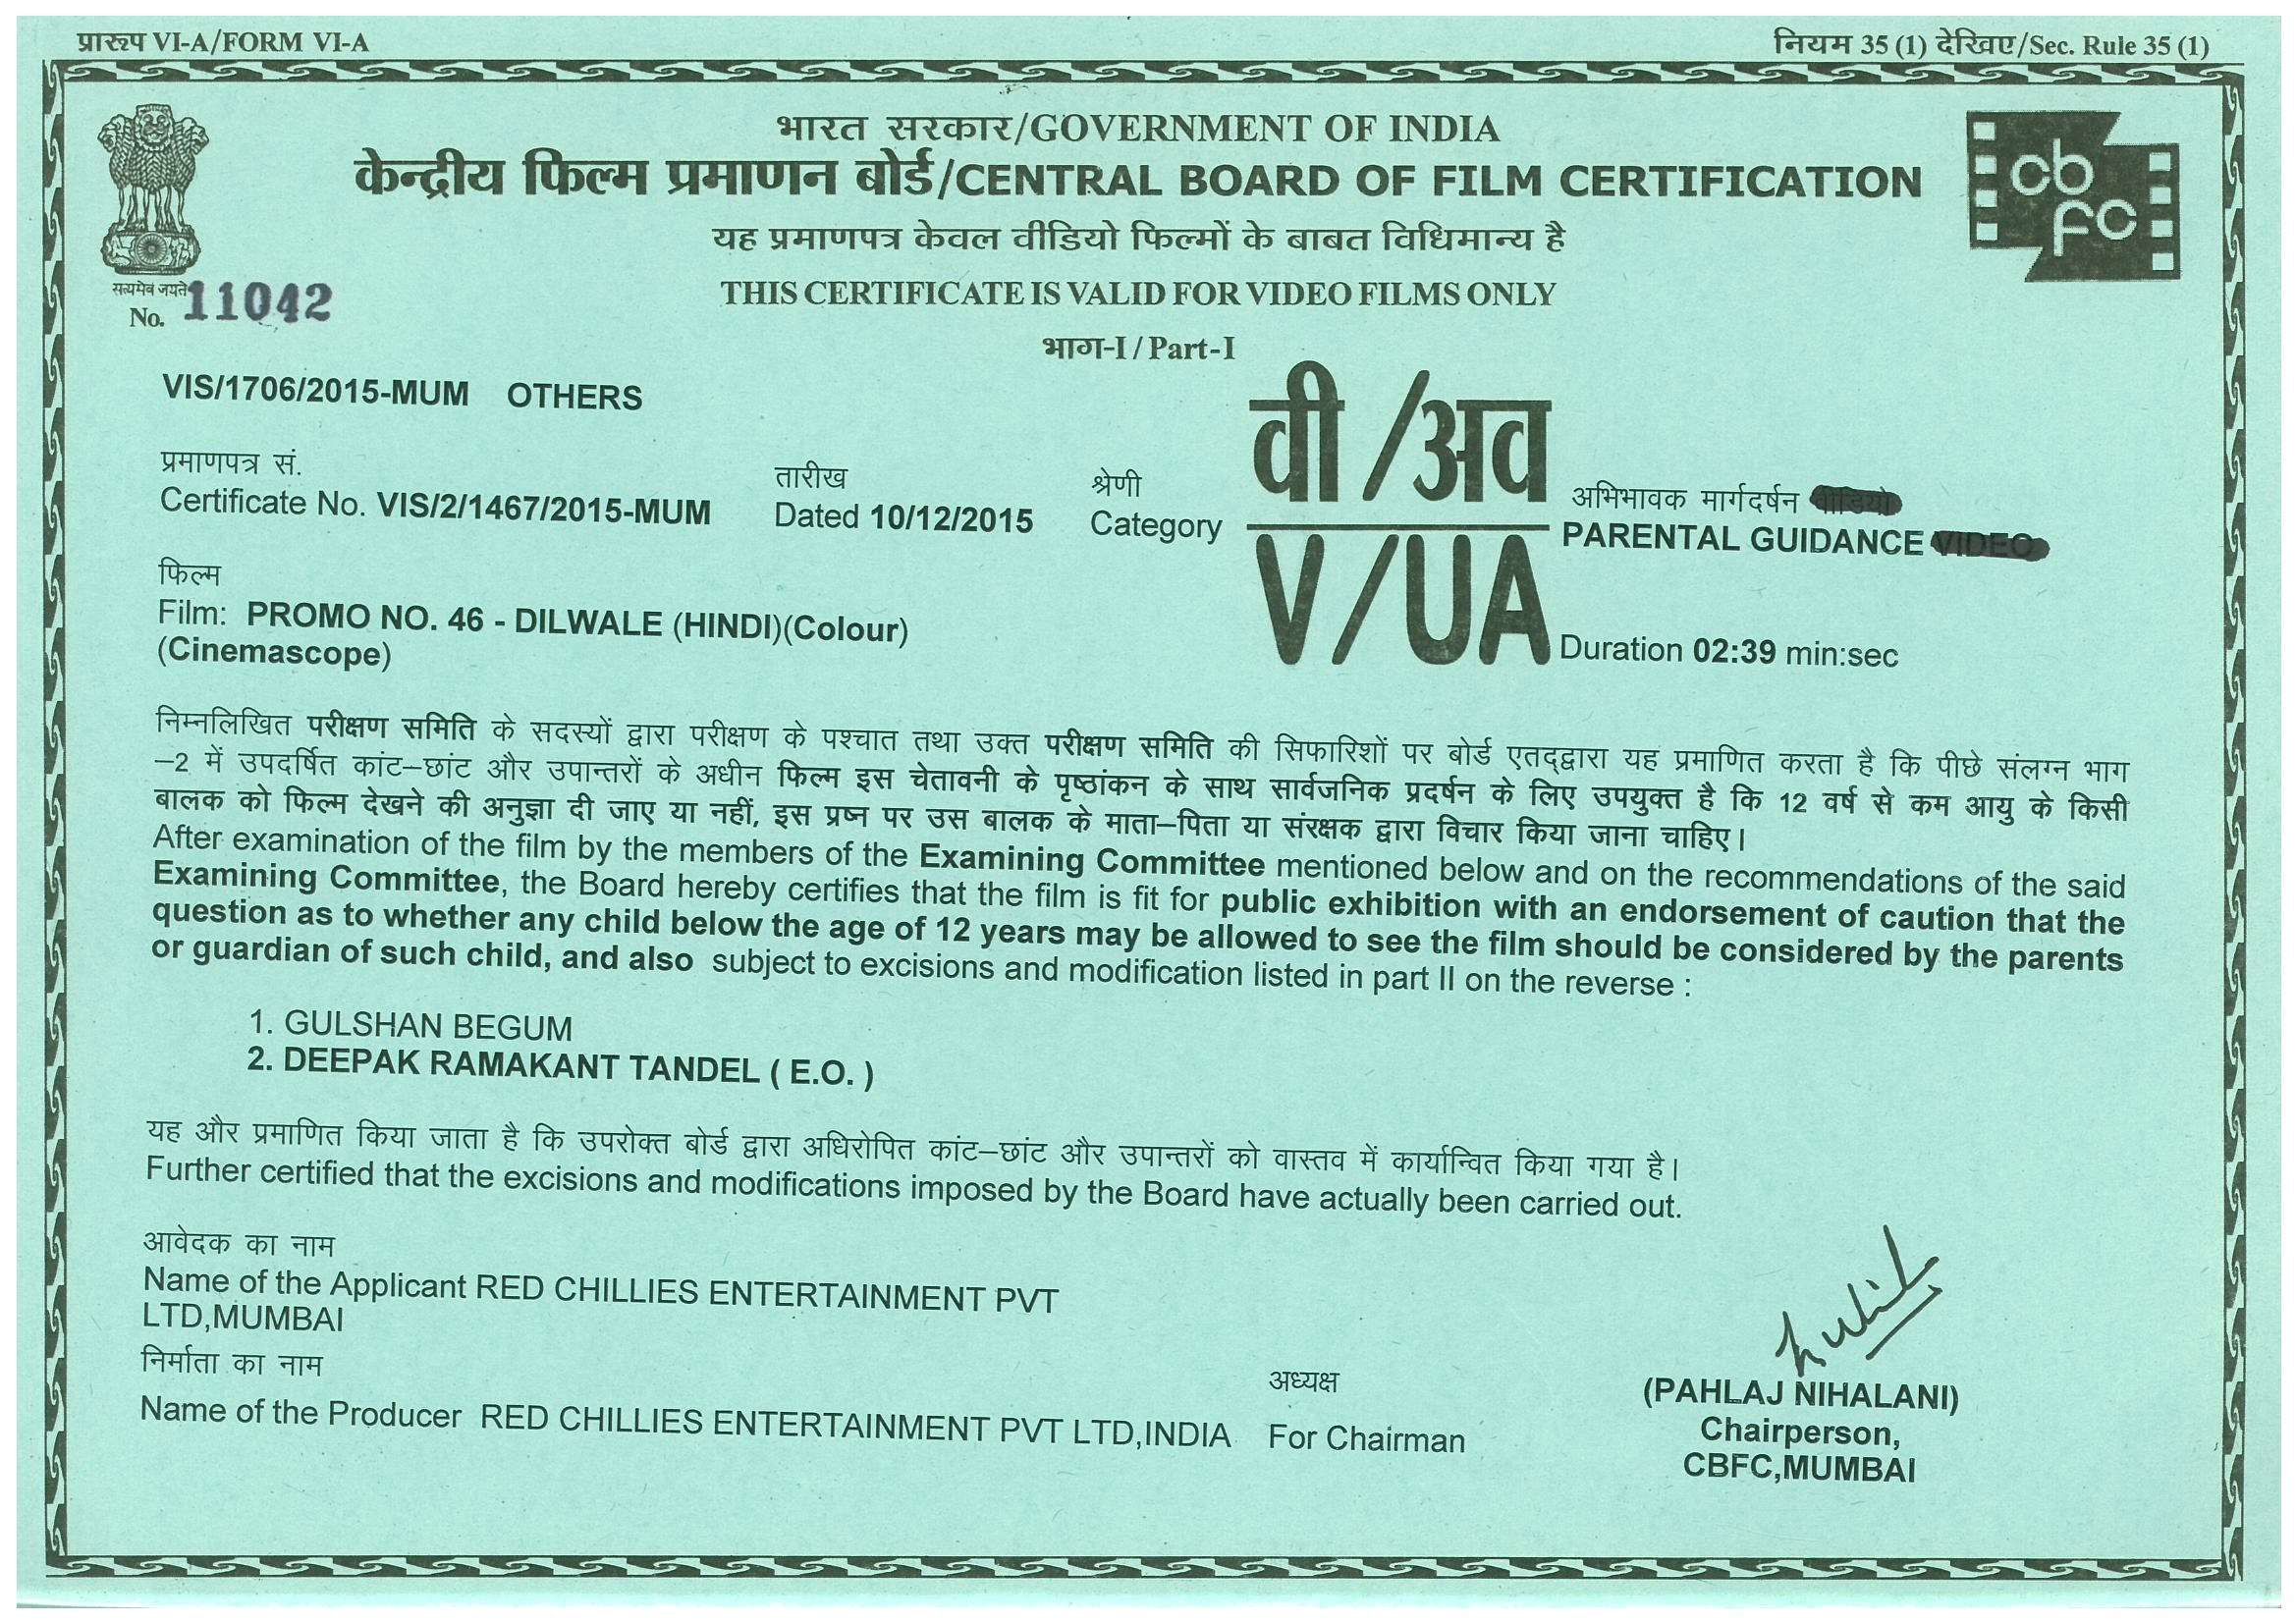 Dilwale Trailer Censor Certificate